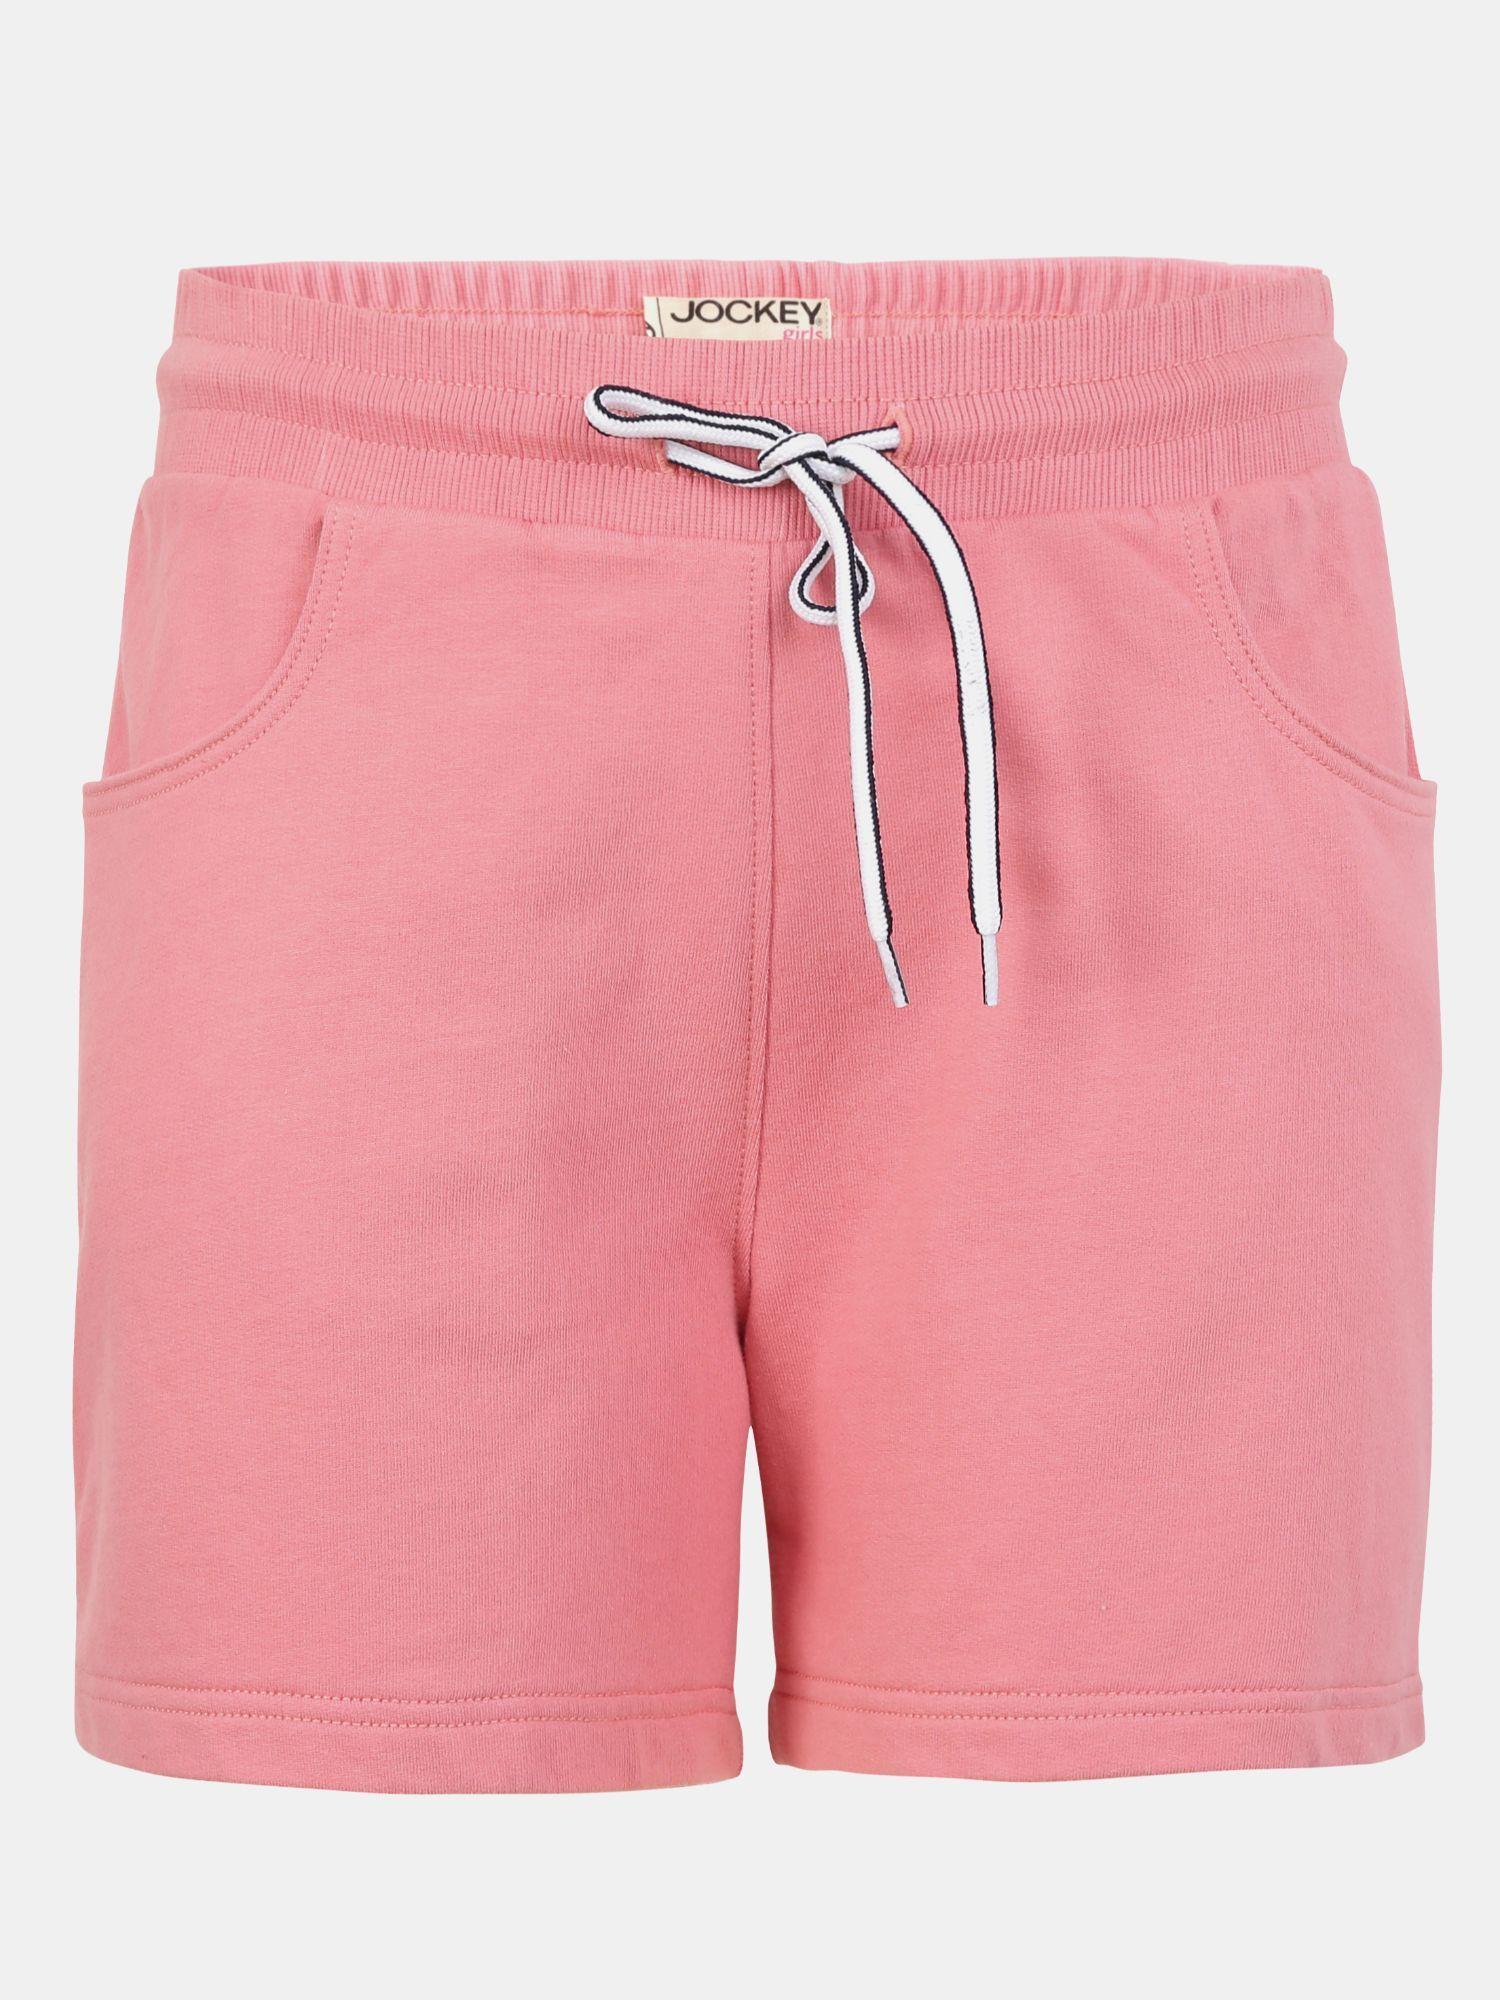 jockey ag04 cotton shorts for girls with front pocket & drawstring closure-pink